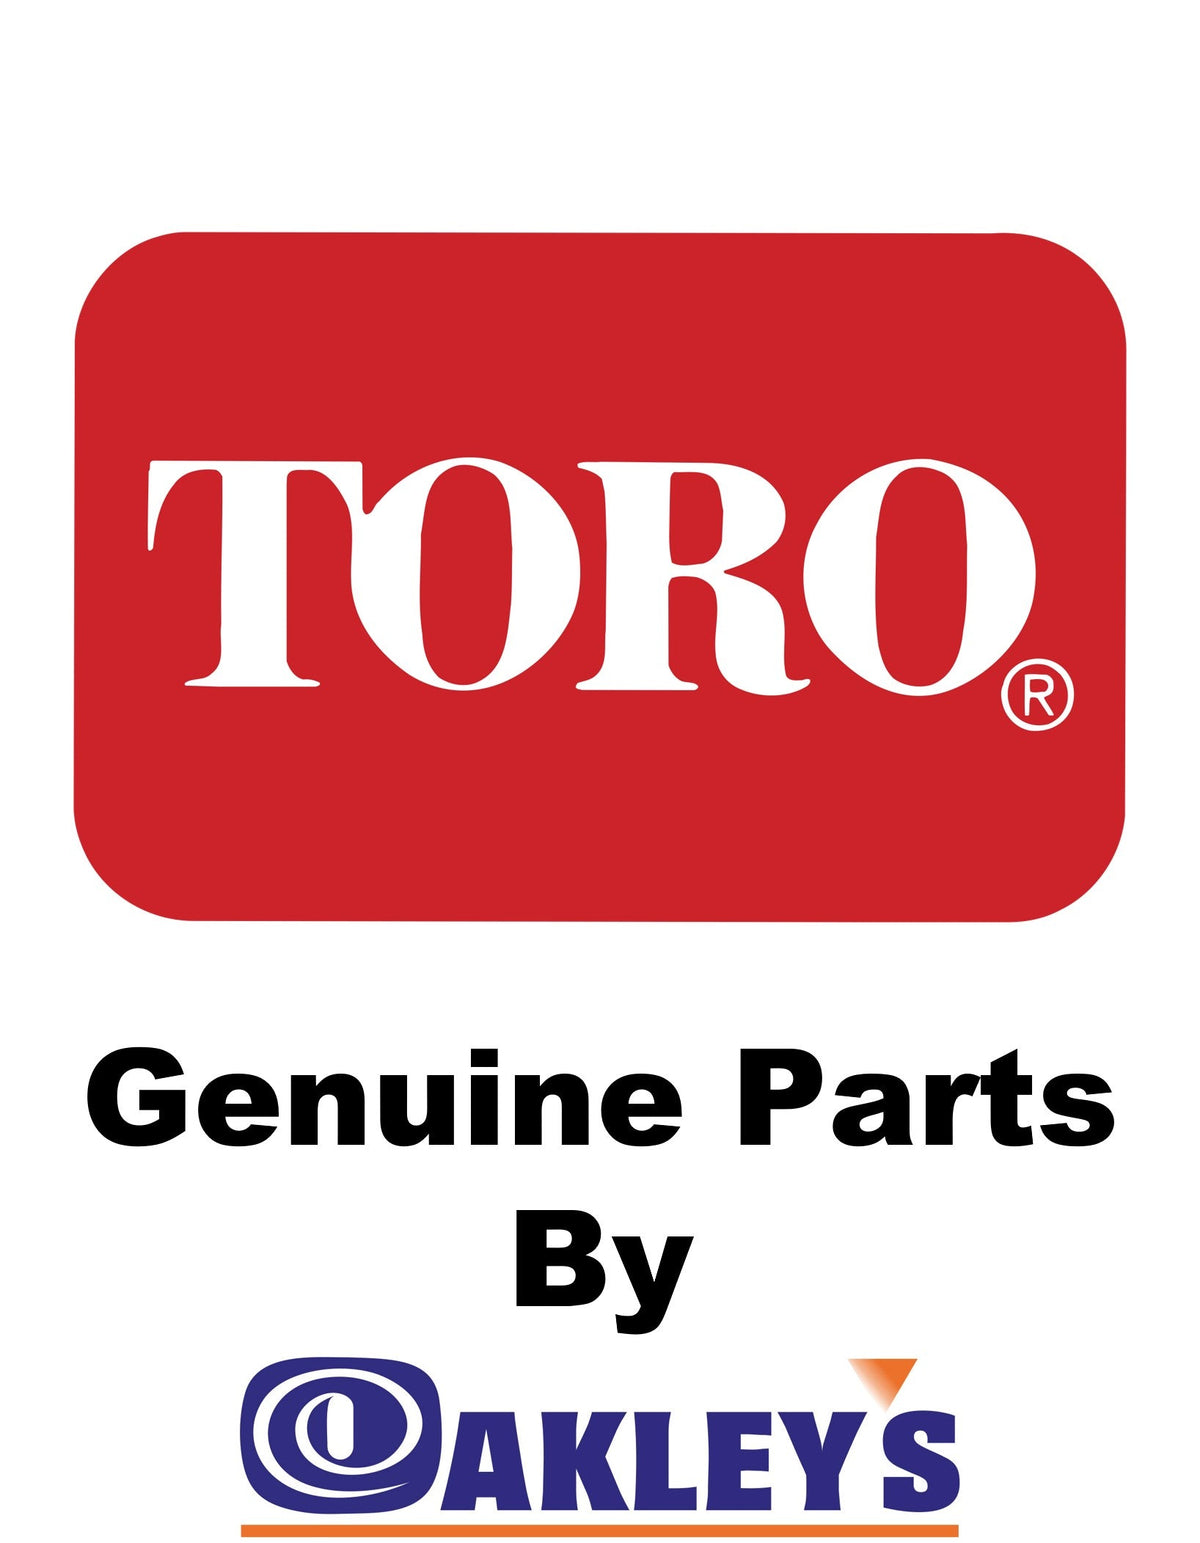 Toro 0-RING - Genuine Part - (117-7922)